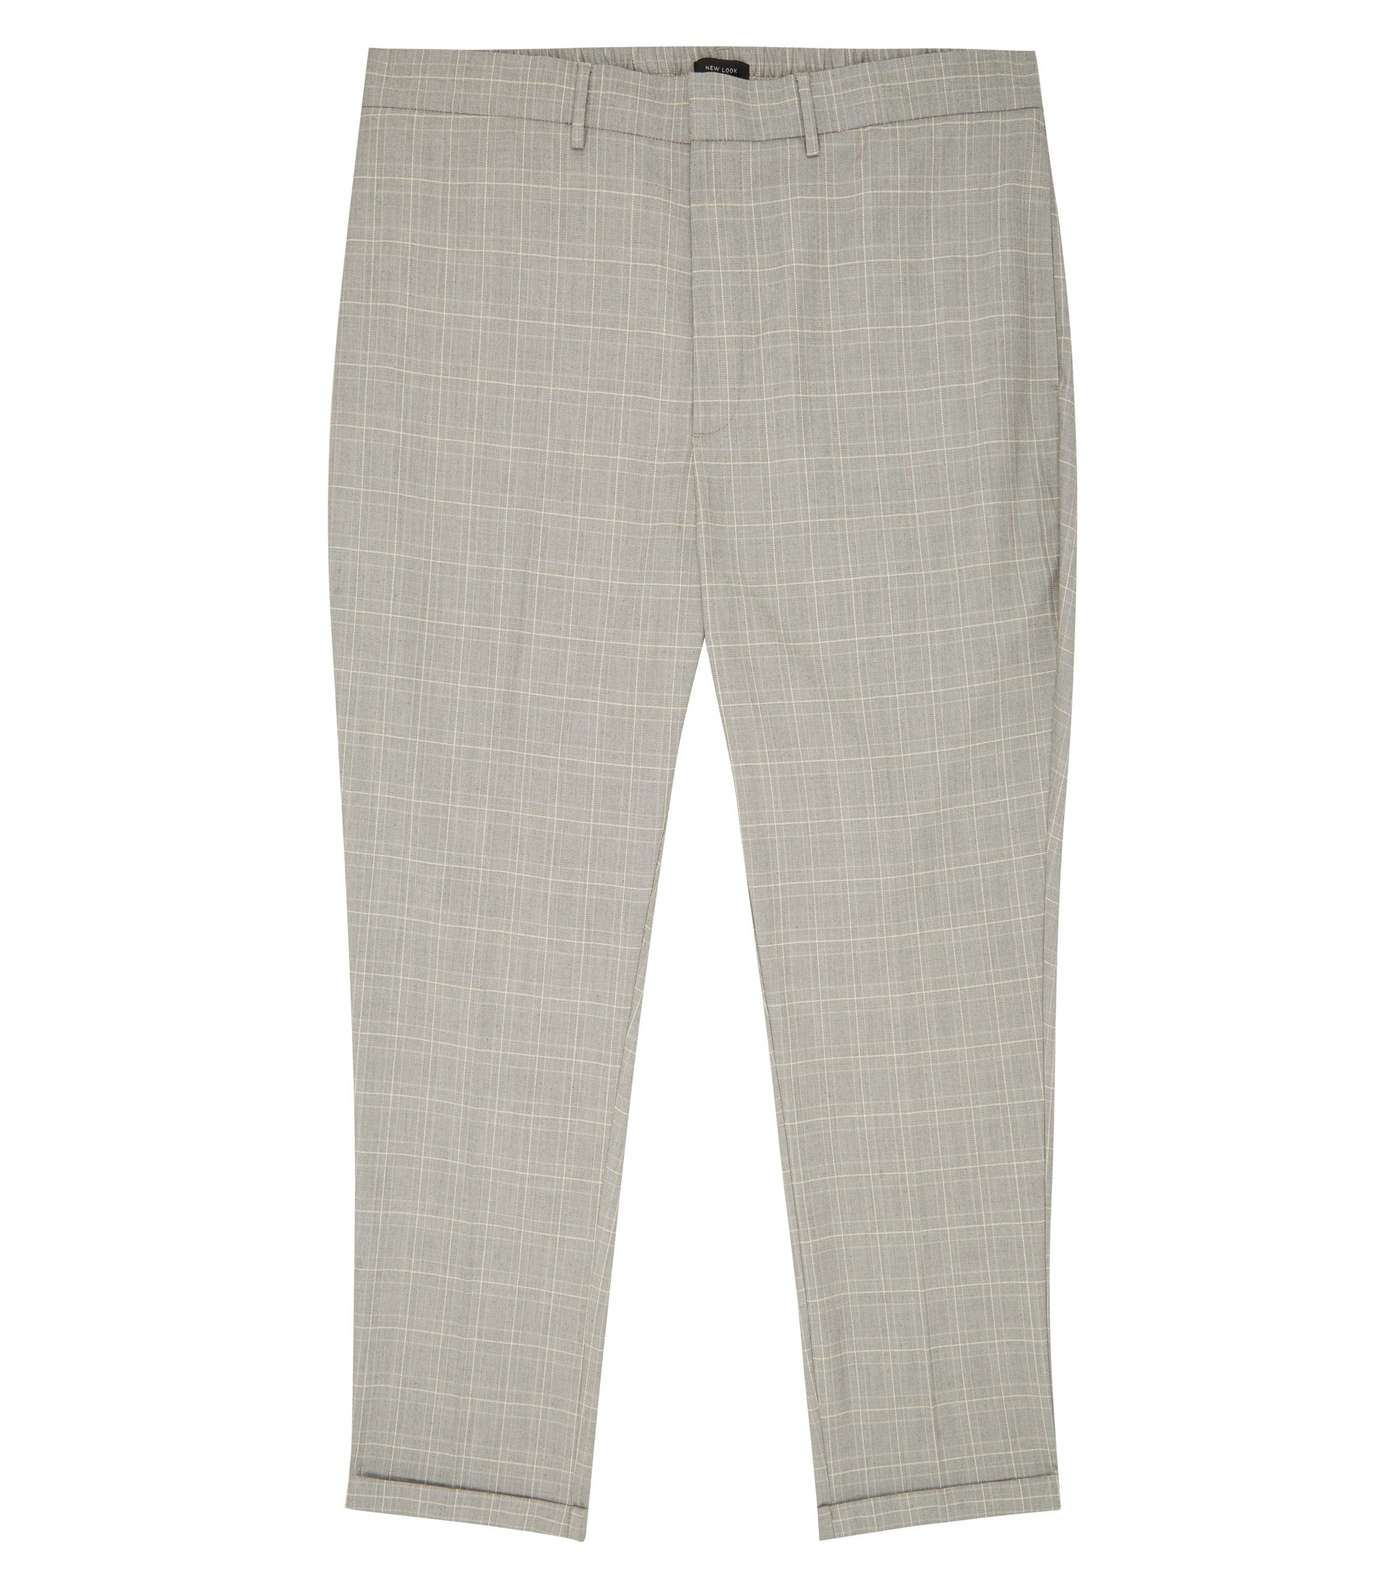 Plus Size Pale Grey Grid Check Print Trousers Image 4